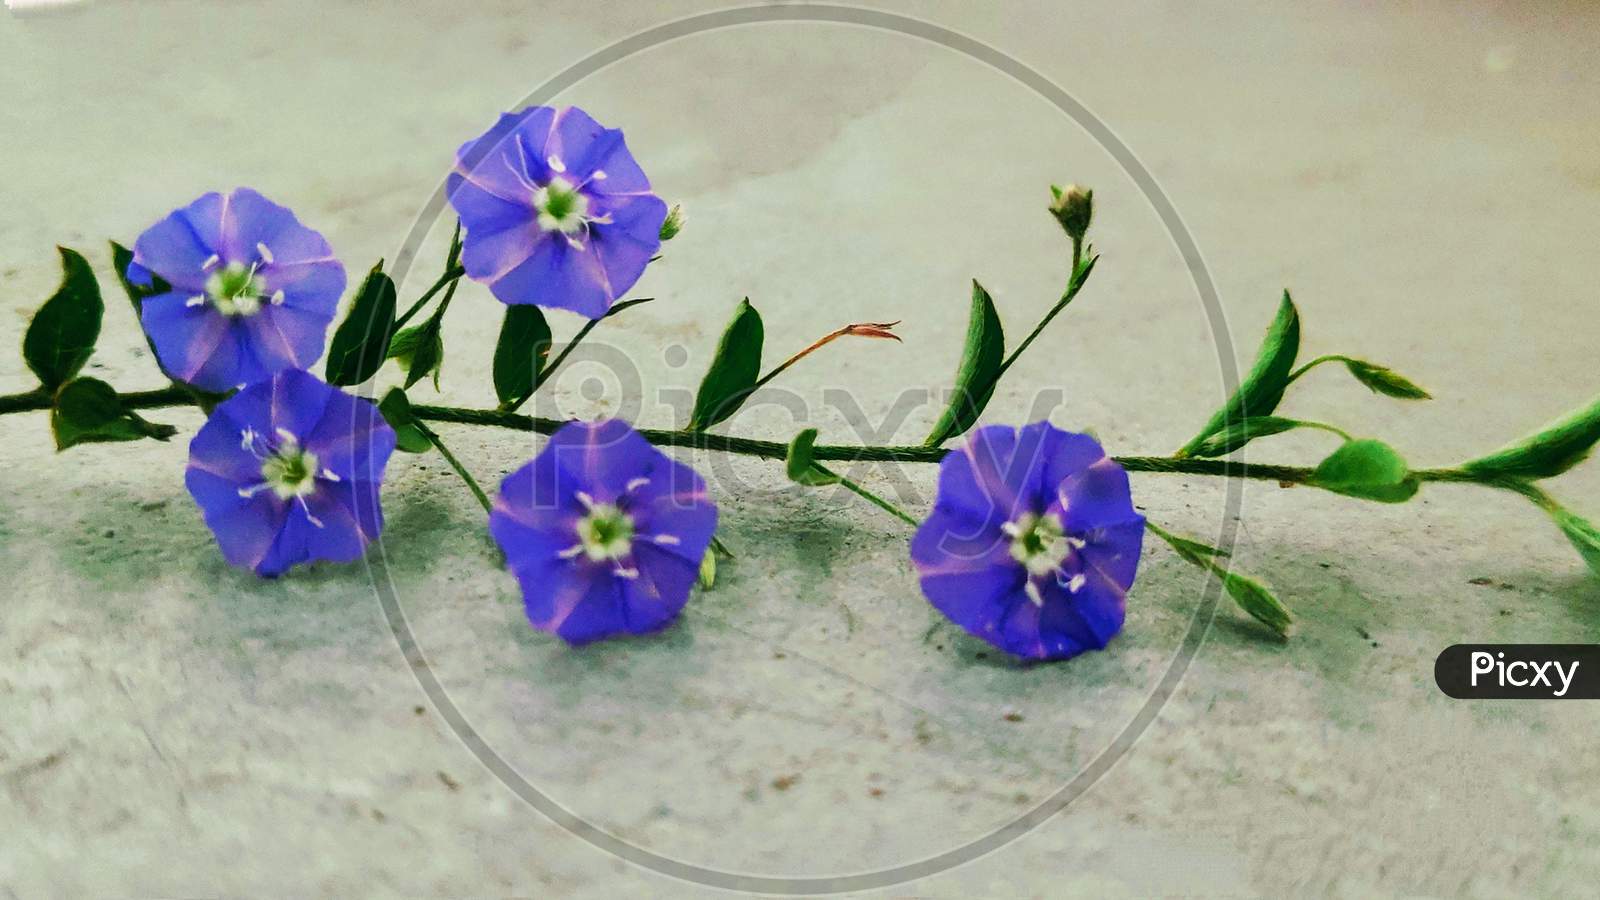 Vishnu kranta విష్ణుక్రాంత Convolvulaceae (morning glory family)  Evolvulus alsinoides flowers